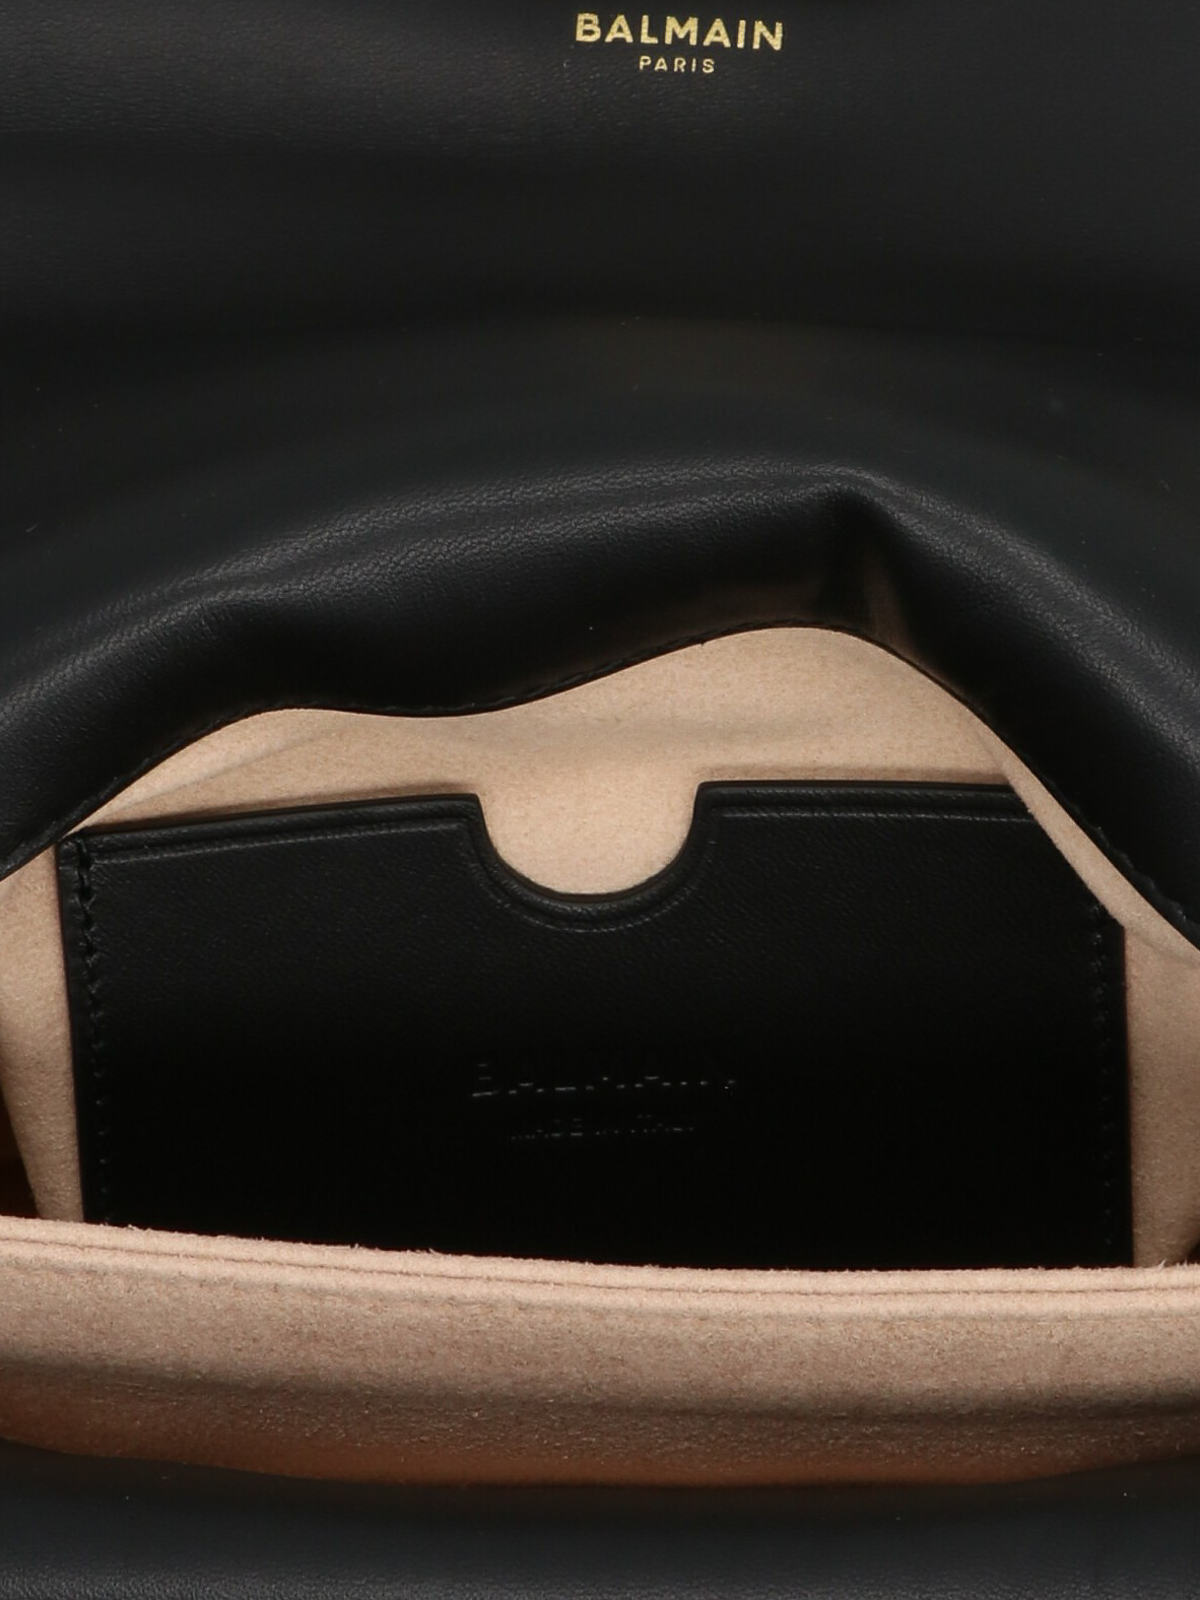 Soft lune grain leather shoulder bag - Aesther Ekme - Women